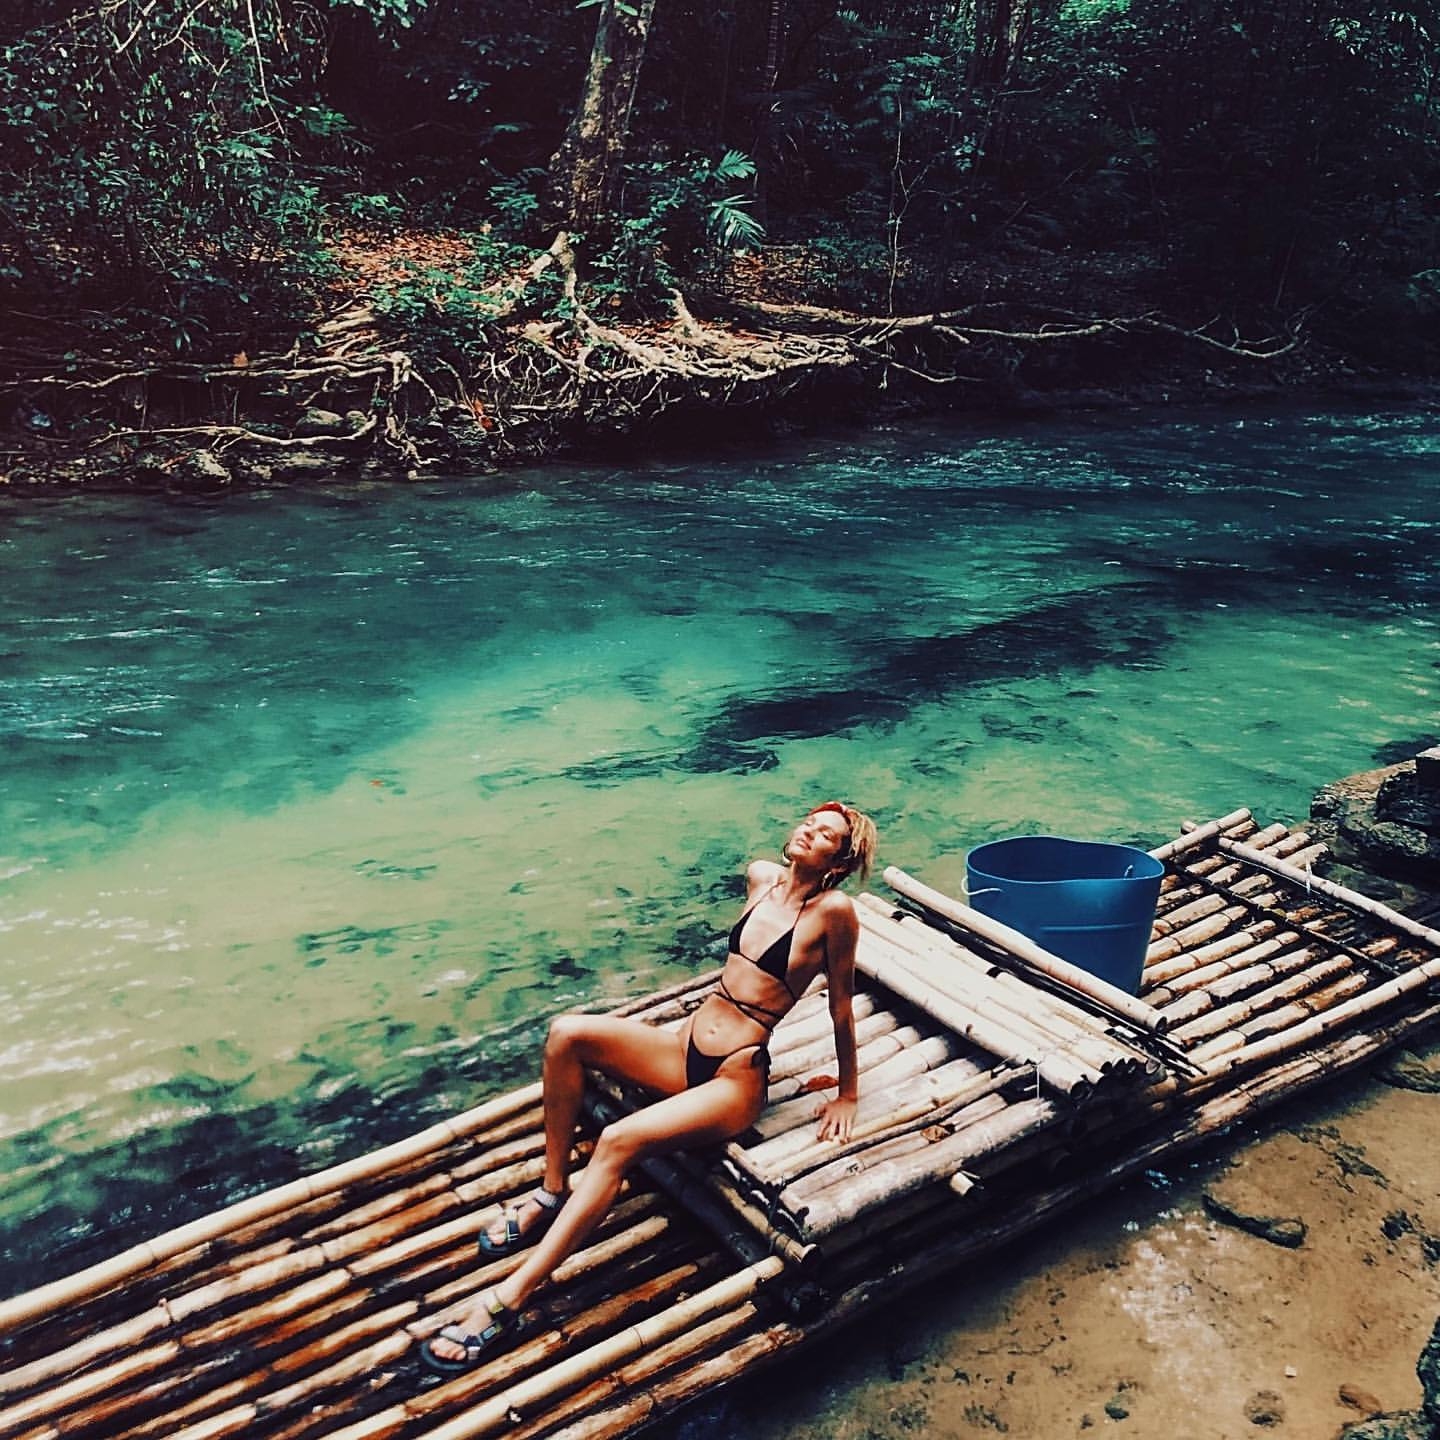 Candice Swanepoel â€“ Instagram and social media